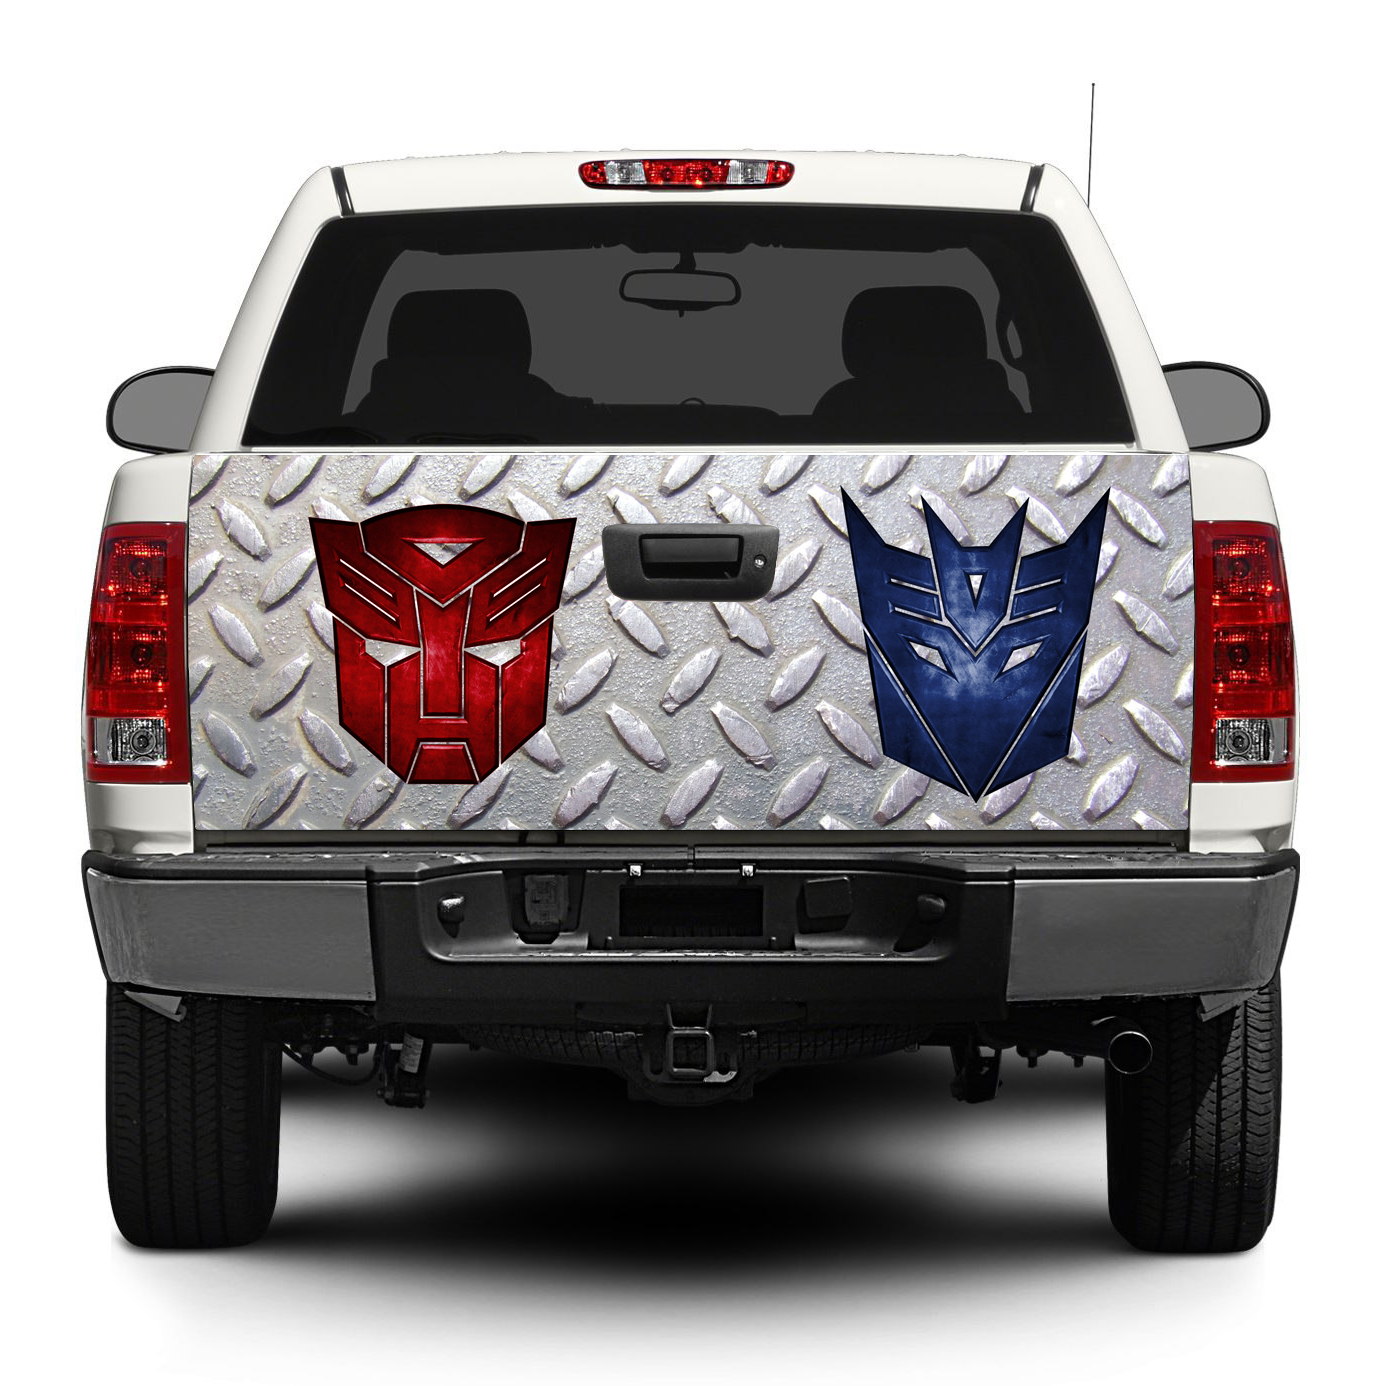 Transformer logo Autobot Decepticon Tailgate Decal Sticker Wrap Pick-up Truck SUV Car